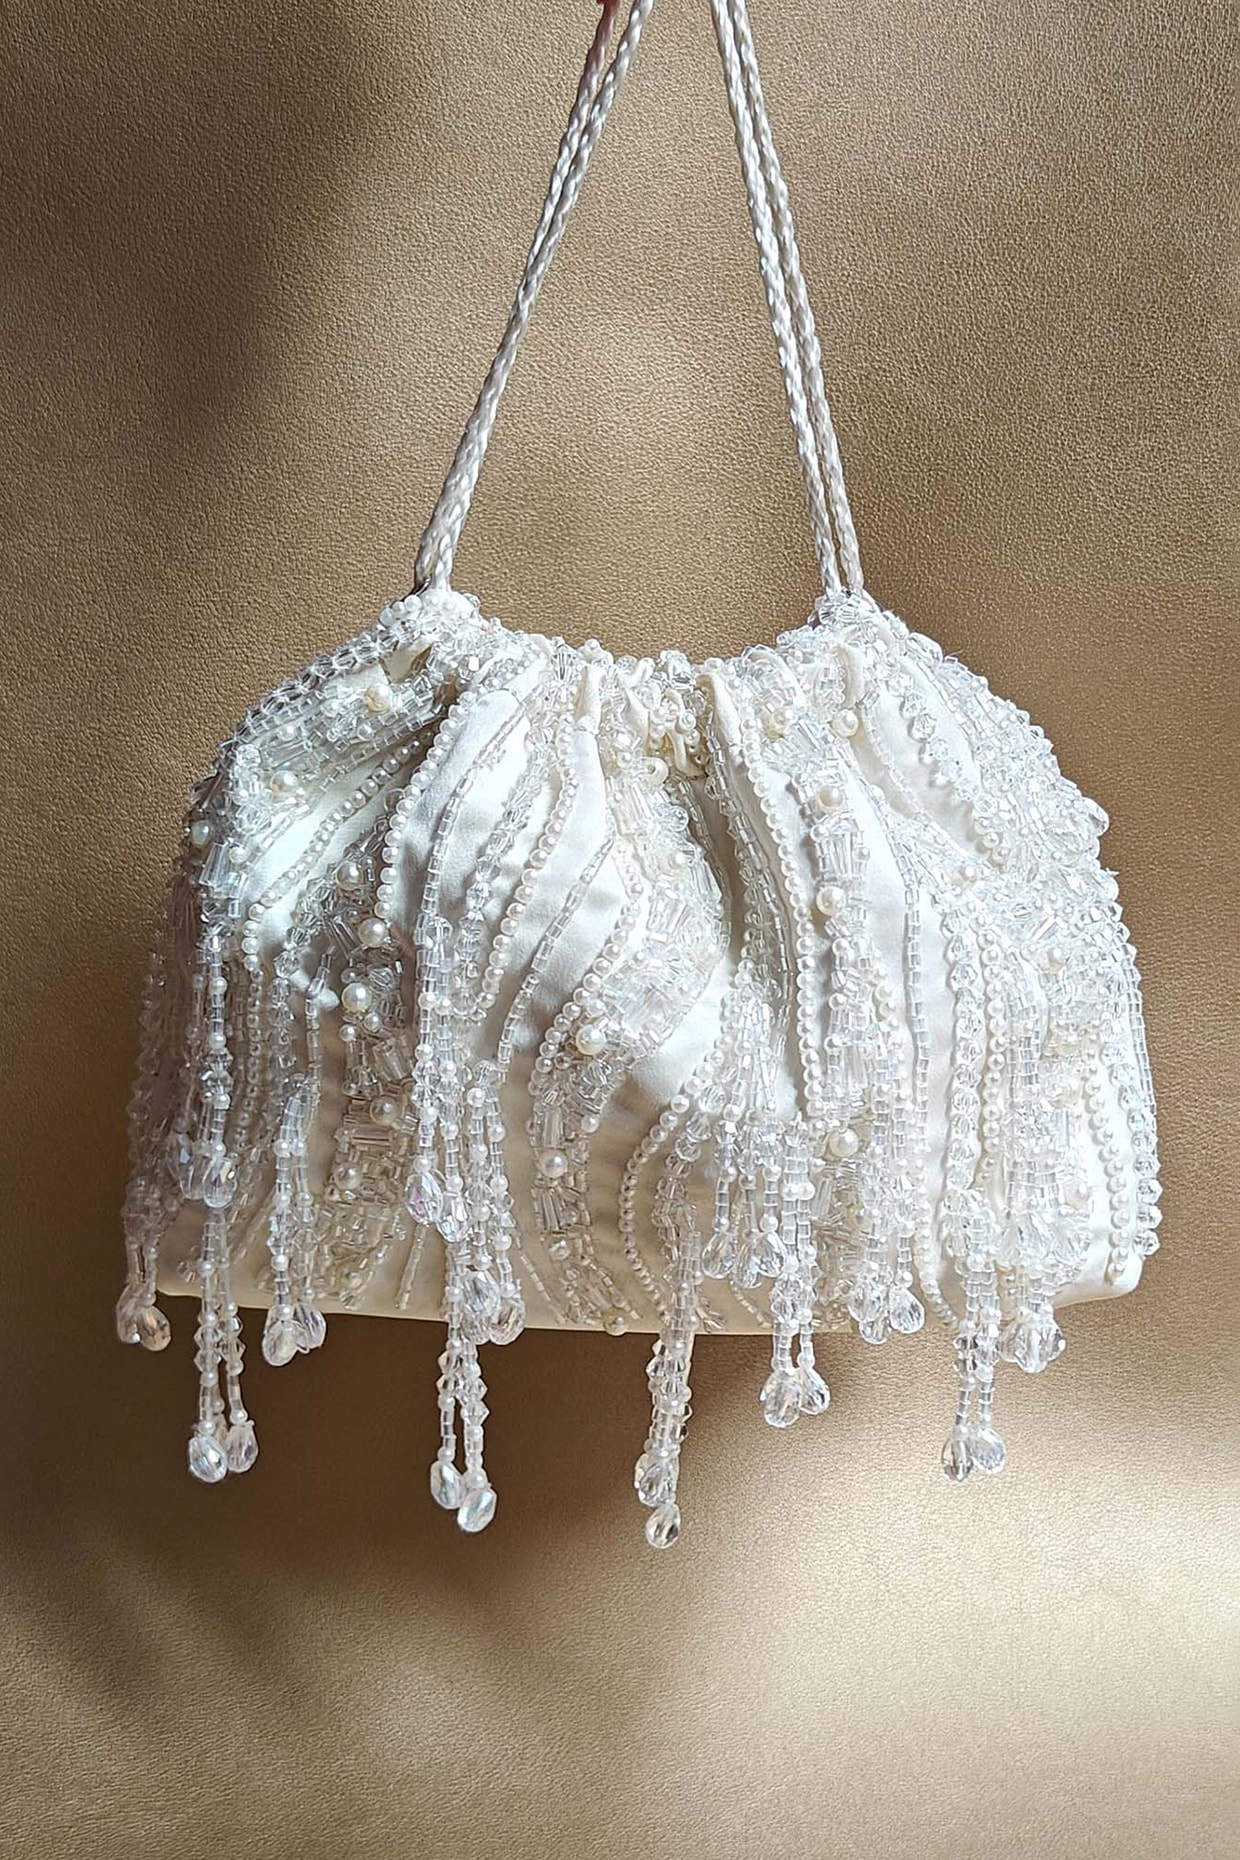 Handmade Rare Dangle White & Gold Faux Silk Embellished Potli Bag | eBay